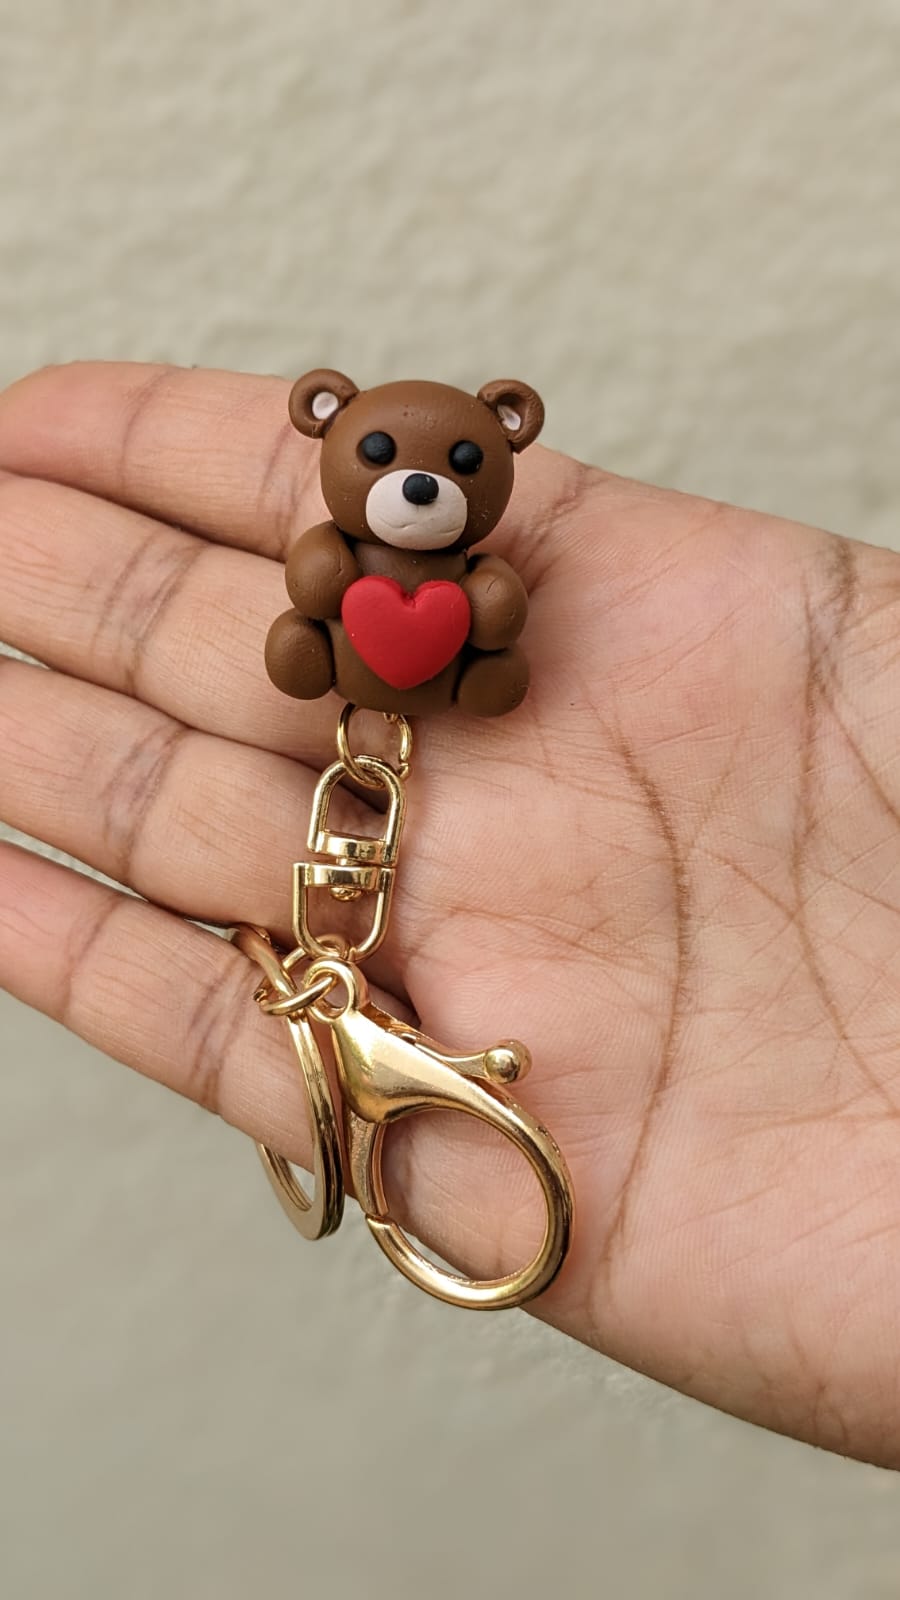 Bear key chain for him